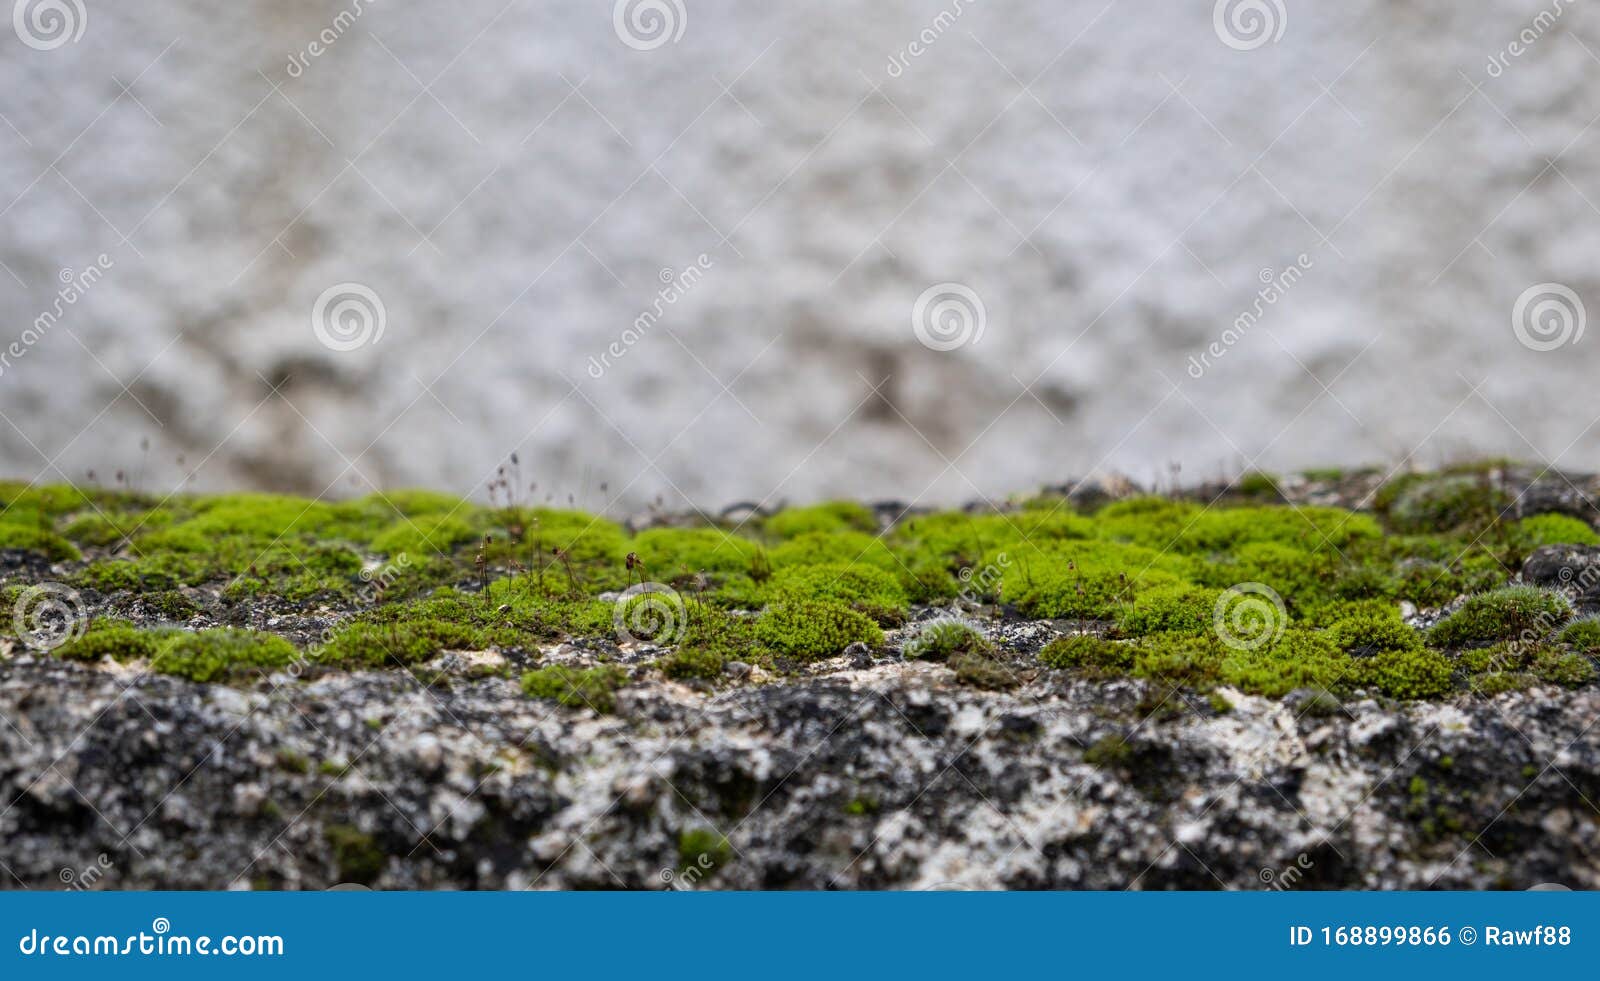 green moss on the floor, moss closeup, macro. blur background, copy space